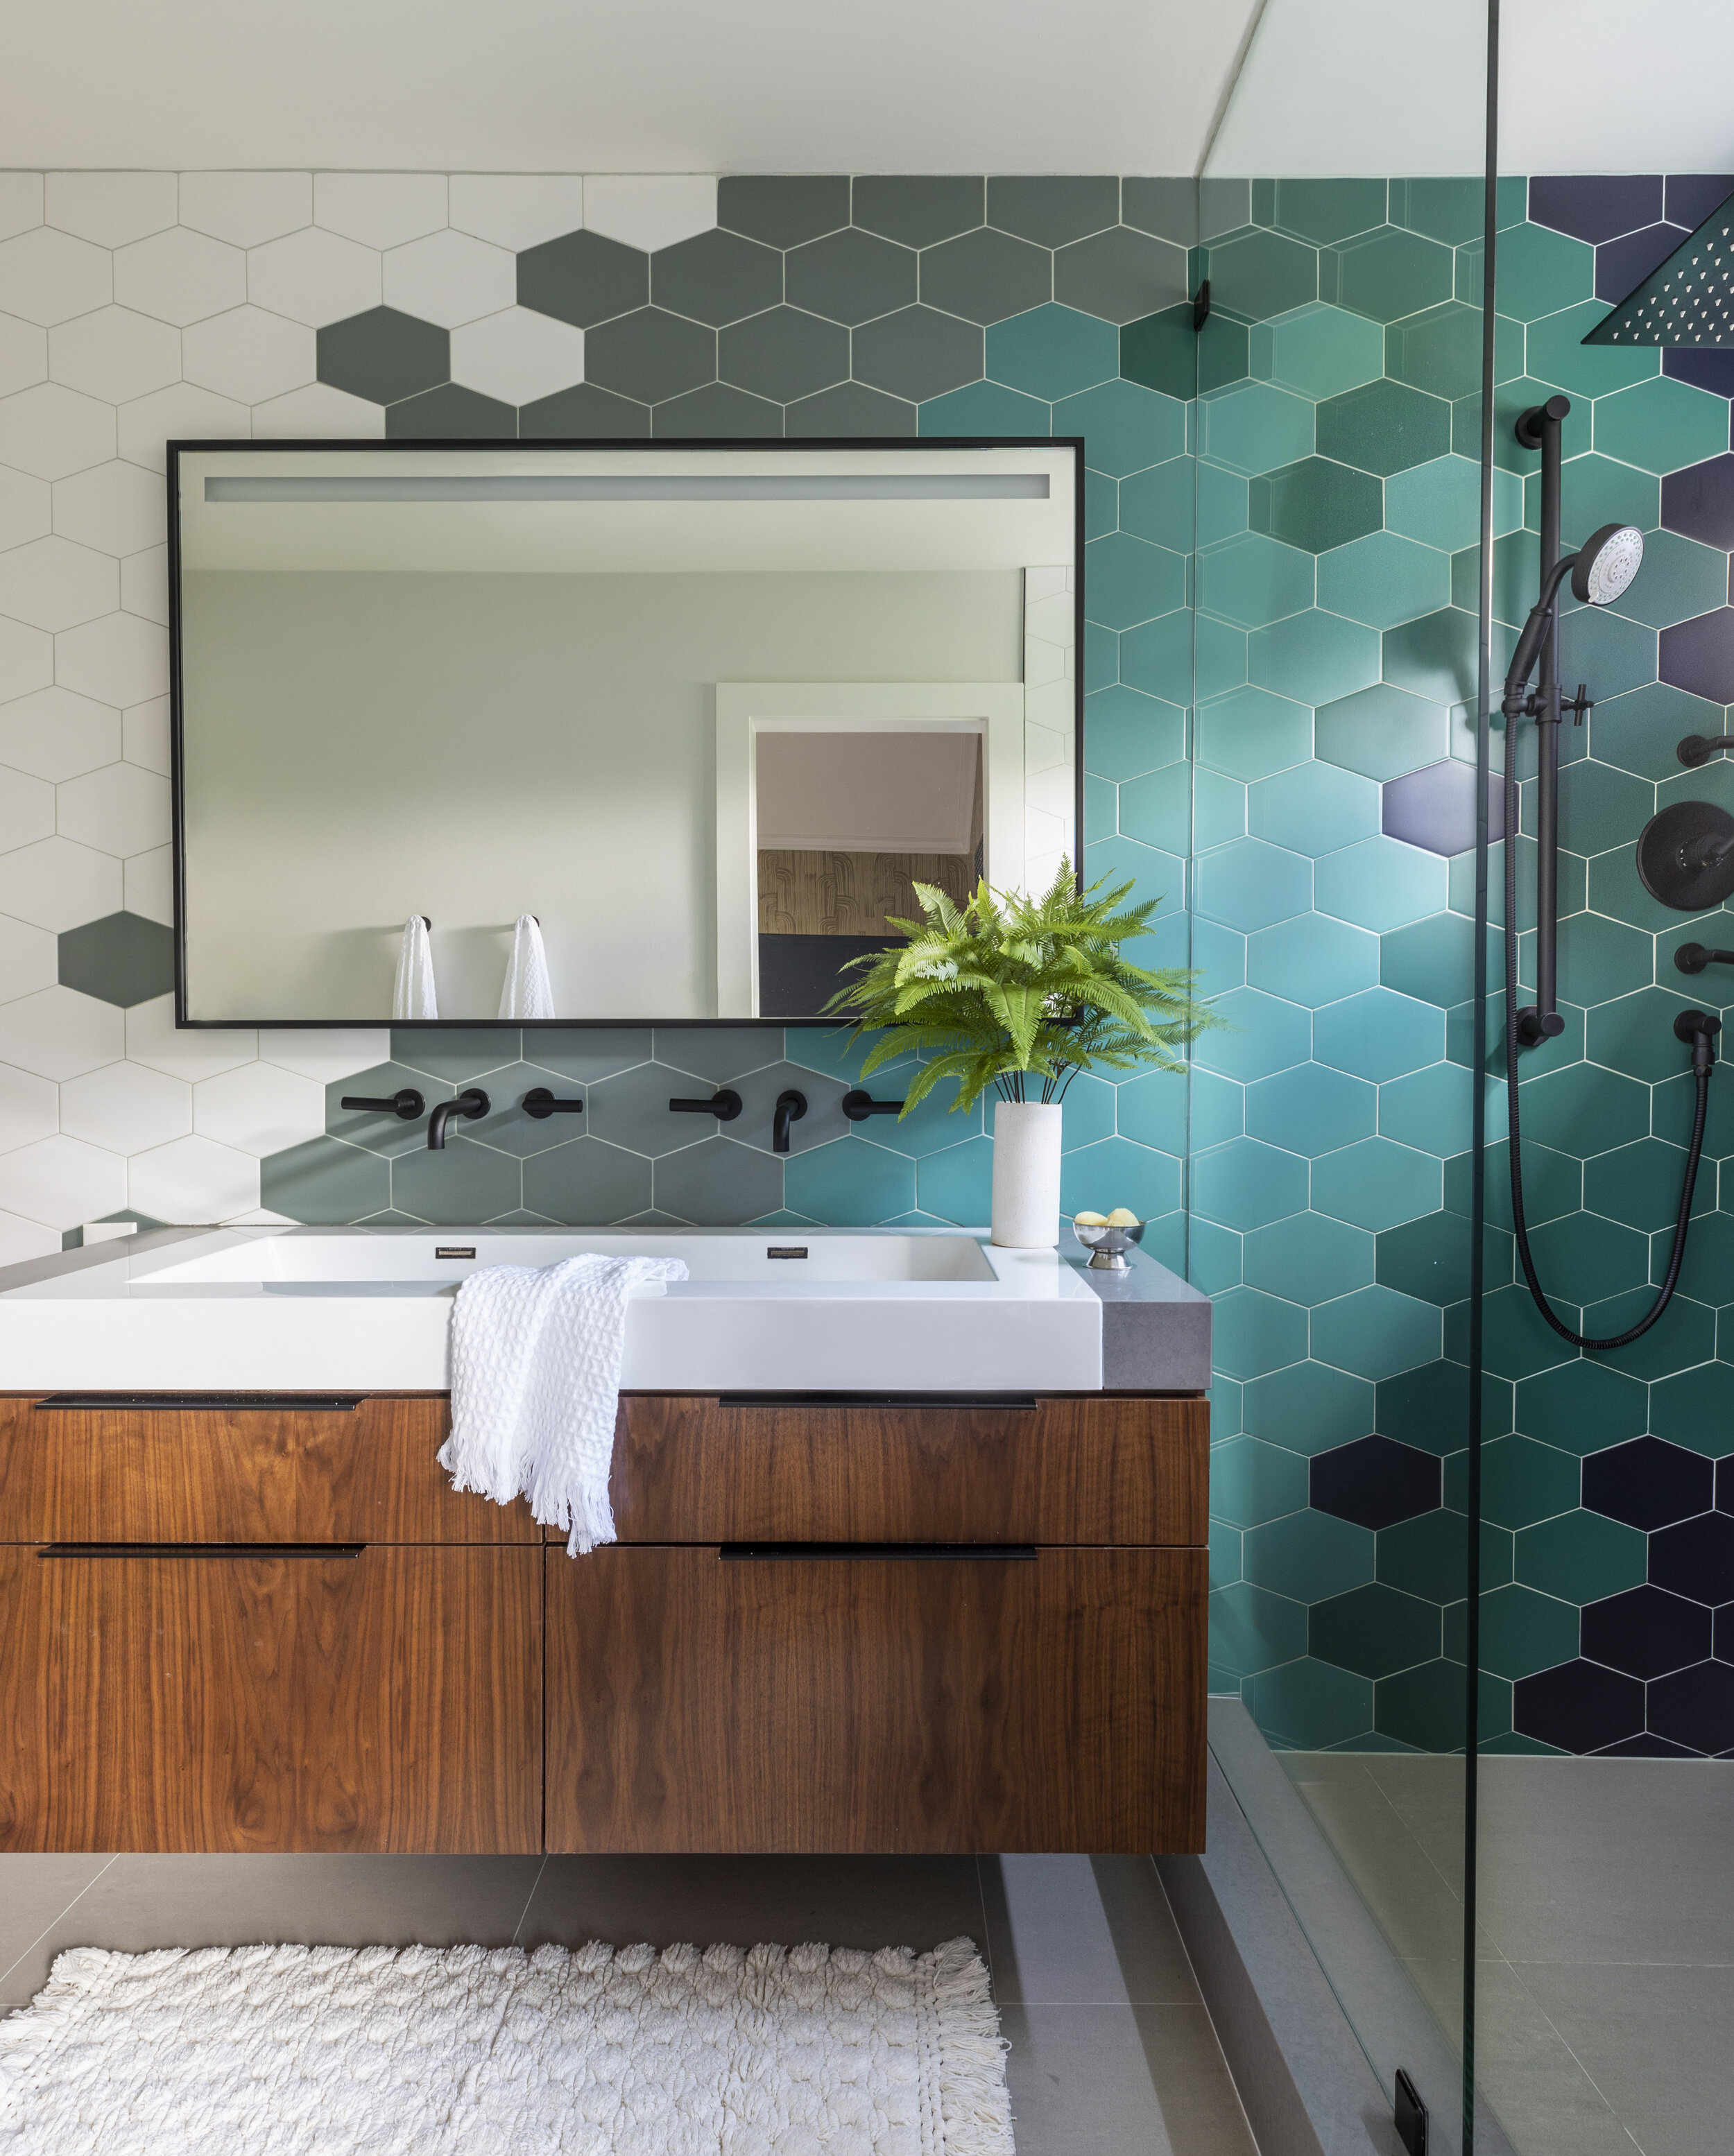 International Bathroom Design | Globally Inspired Home Interior Design